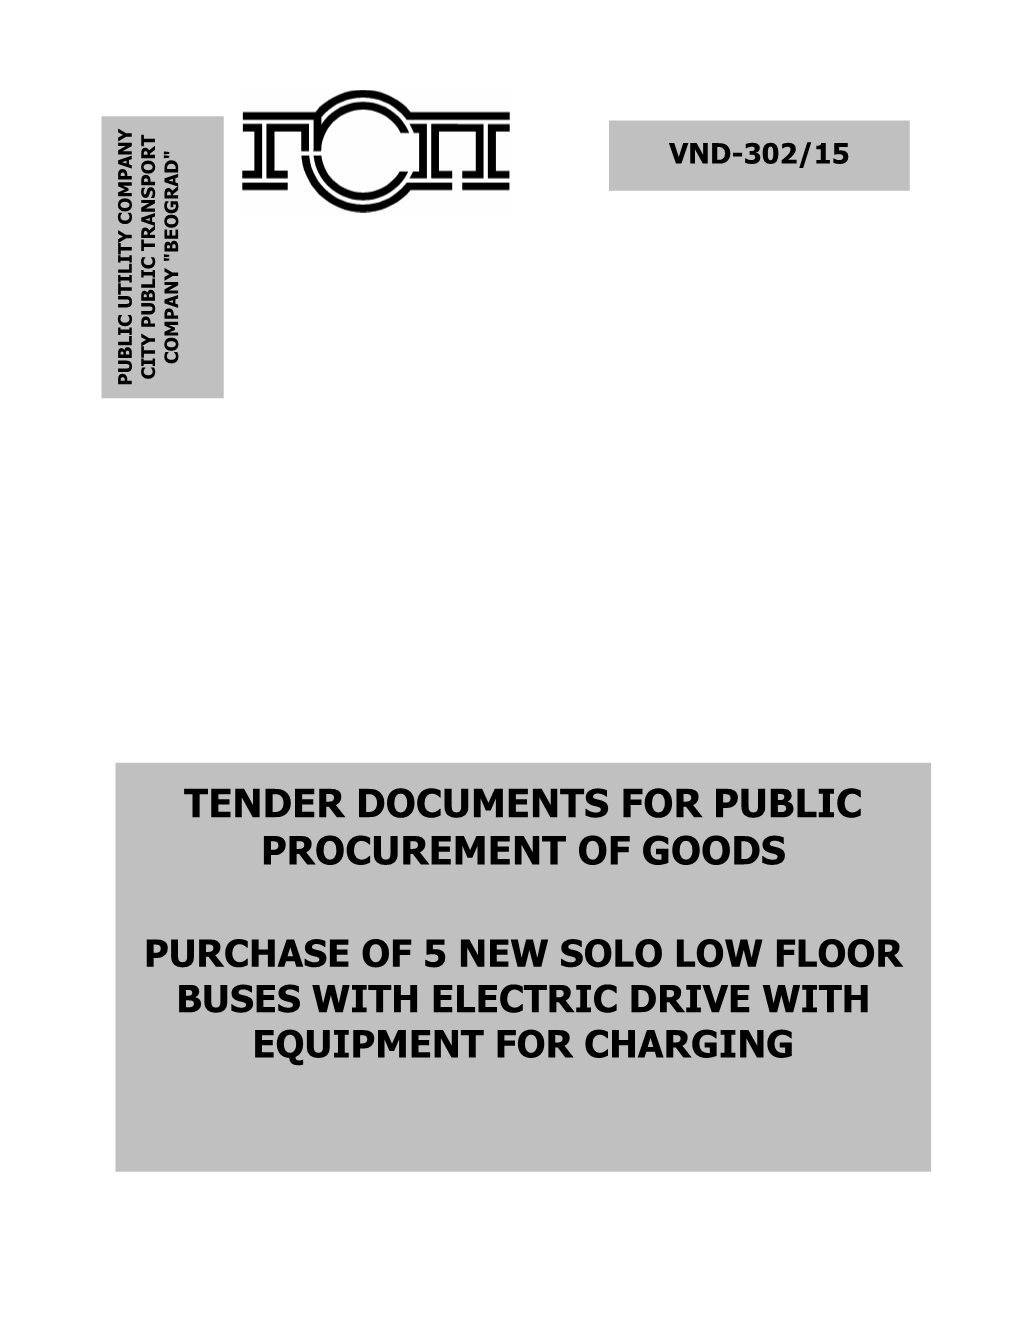 Tender Documents for Public Procurement of Goods